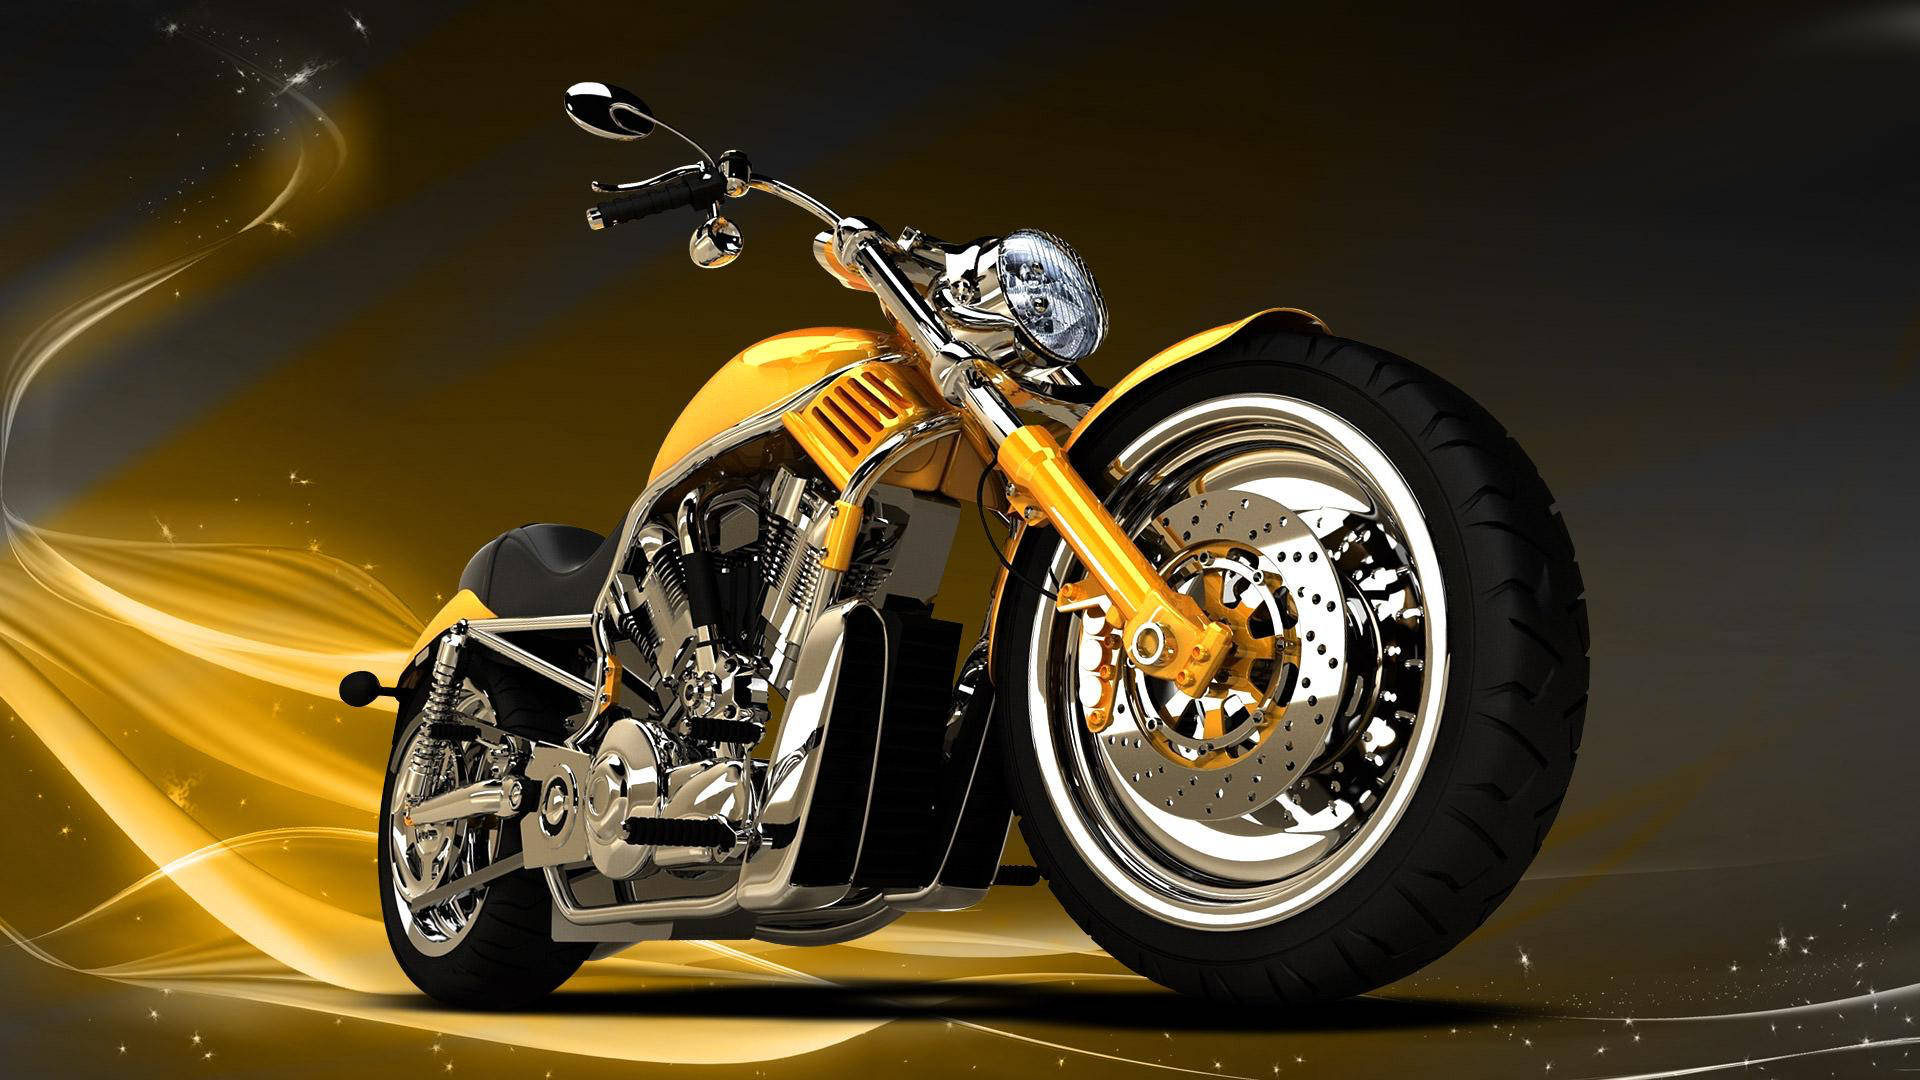 Chopper motorcycle vibrant yellow wallpaper 